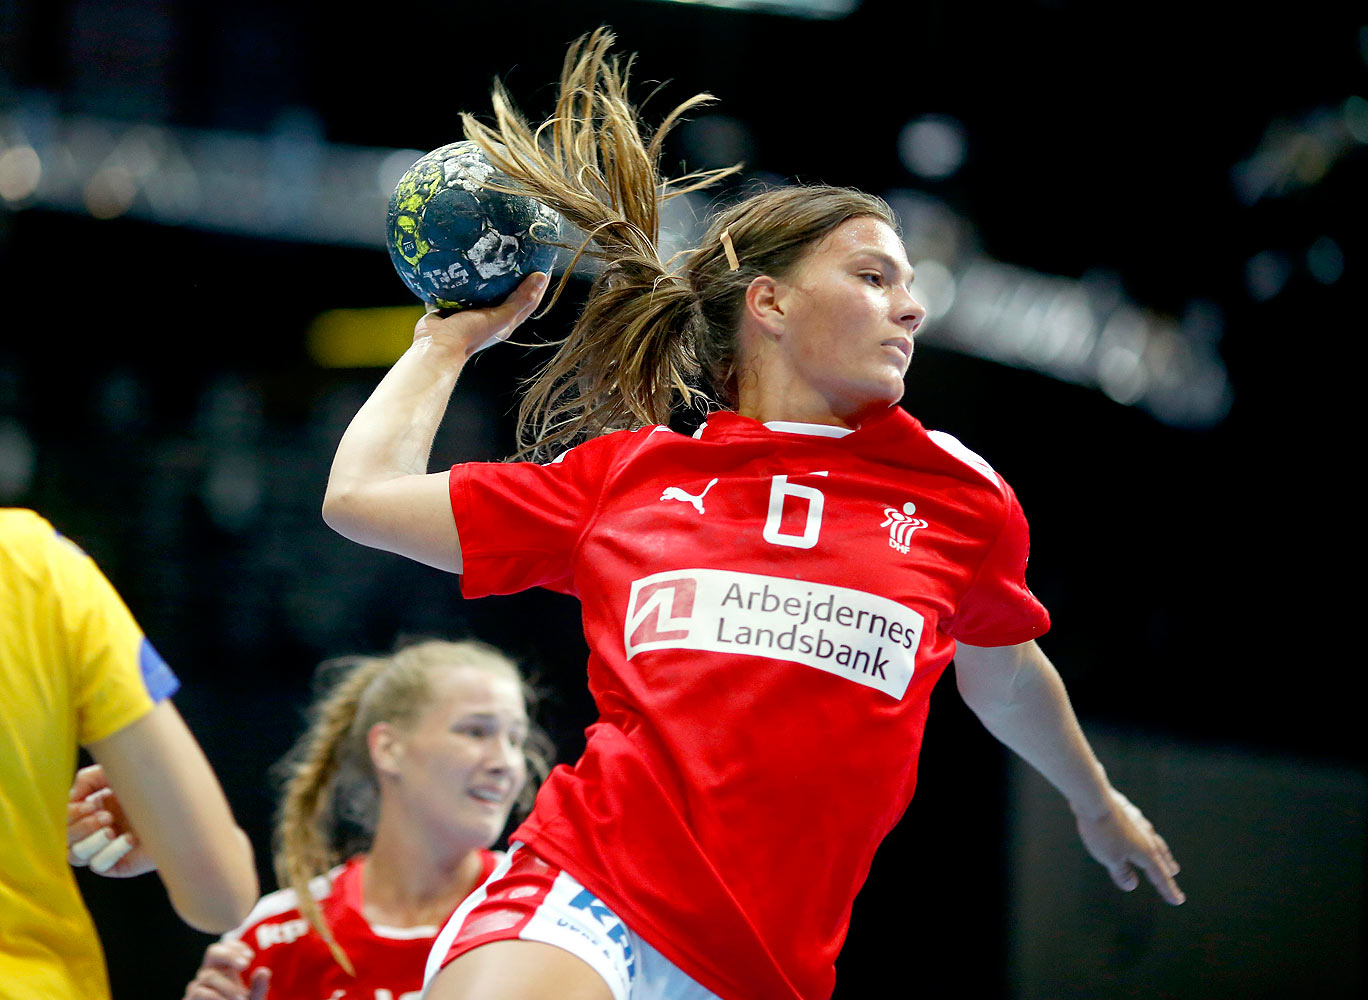 European Open W18 FINAL Denmark-Sweden 33-34,dam,Scandinavium,Göteborg,Sverige,Handboll,,2016,138641